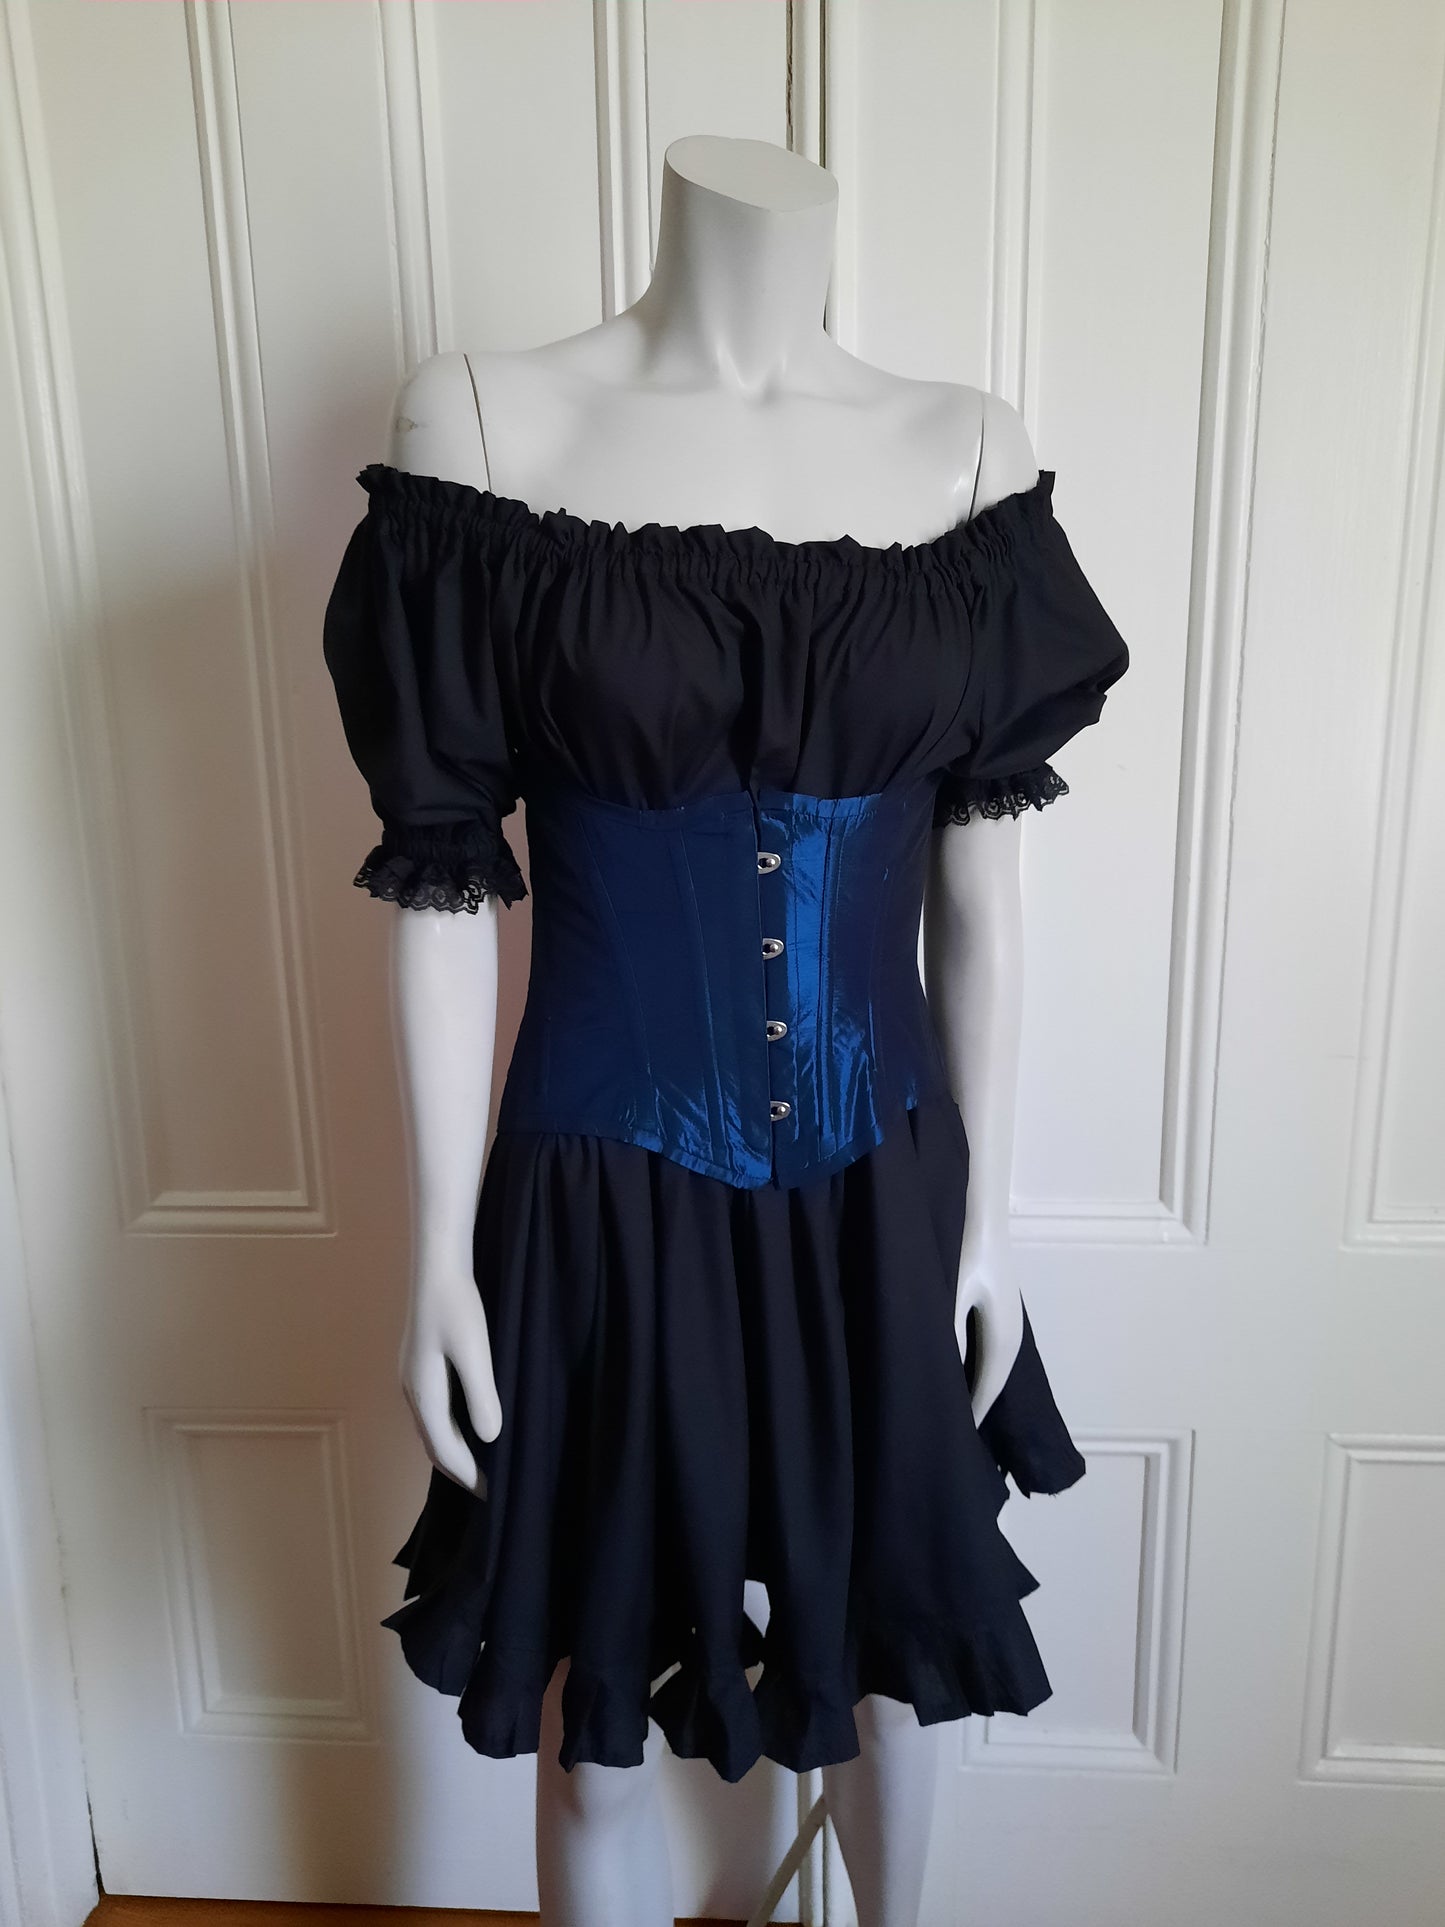 Blue Iridescent taffeta underbust corset